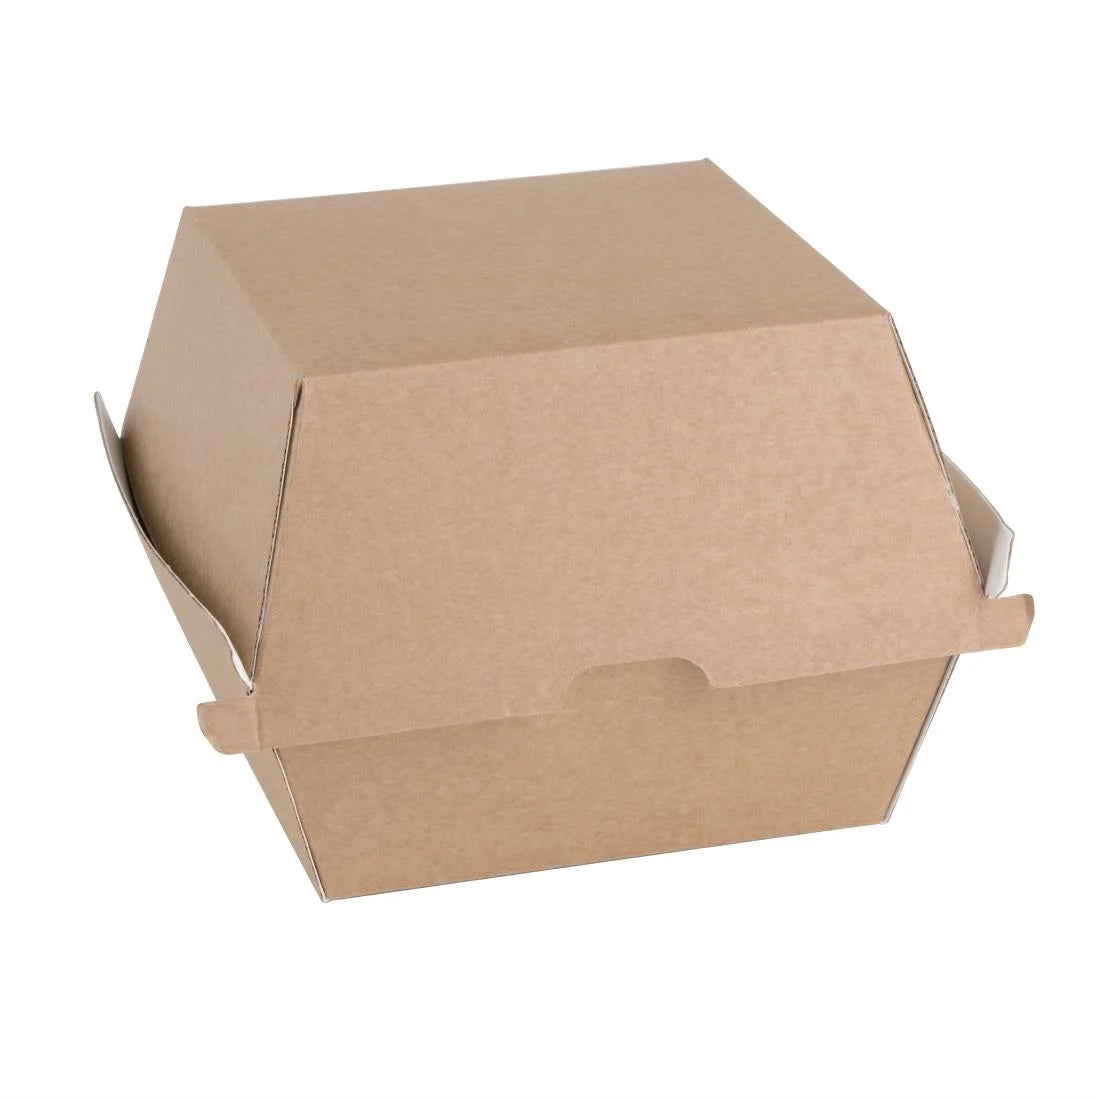 Burger box Large 2# 250's - Value Pack Perth